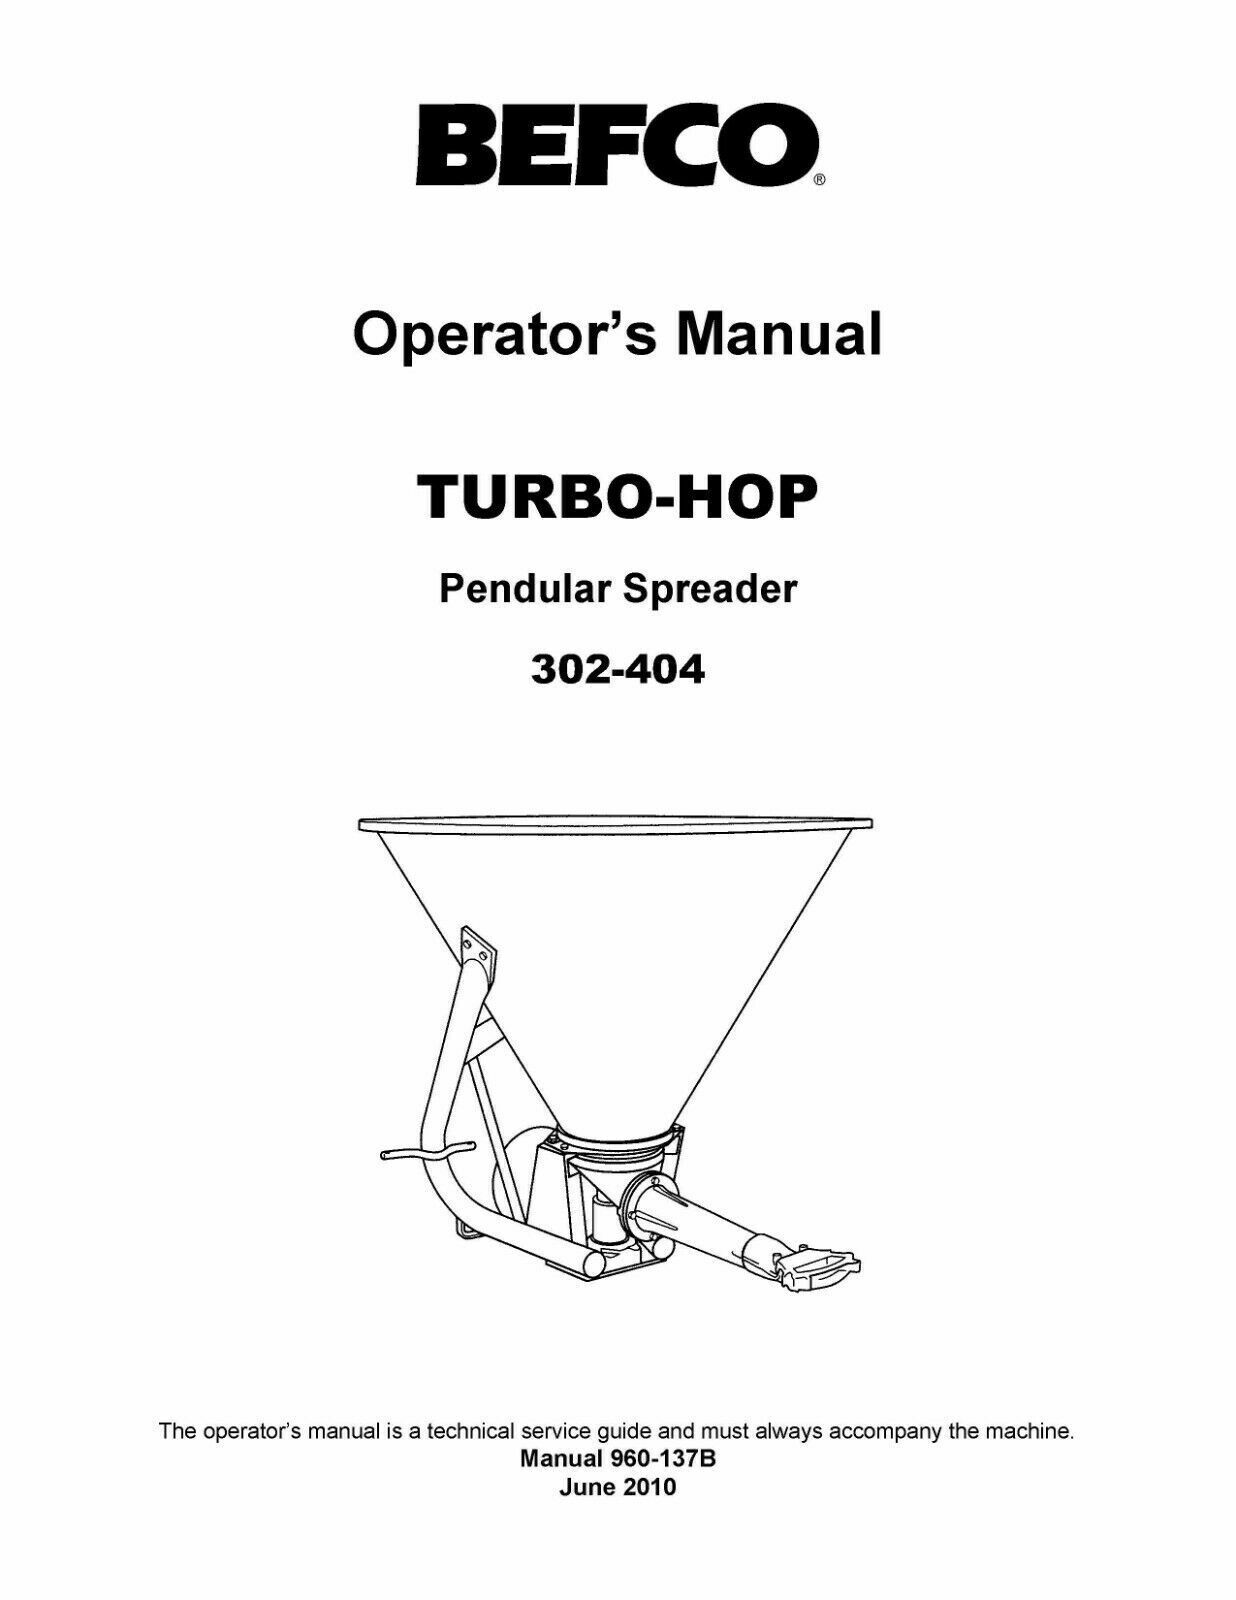 Pendular Spreader Operator Instruction Maint & Parts Man BEFCO 320 404 TURBO-HOP